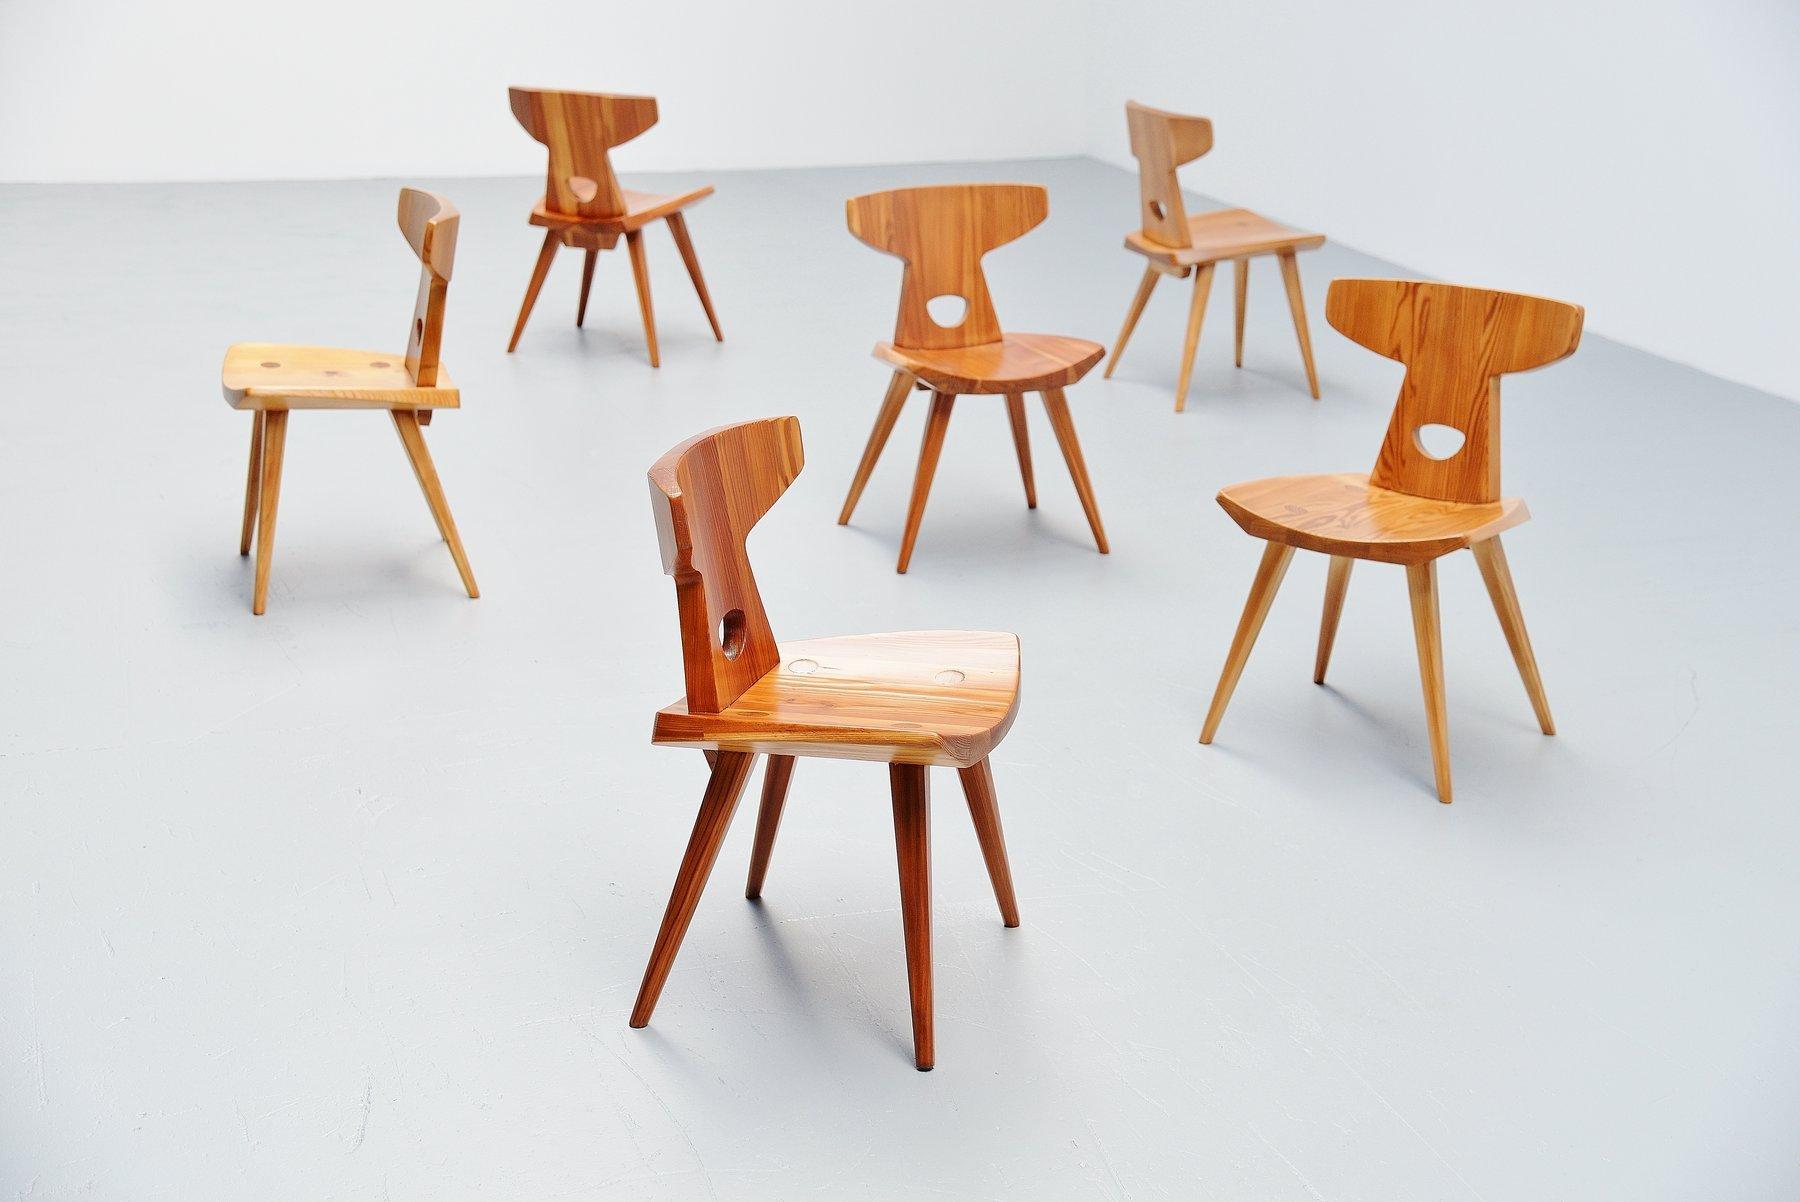 Pine Jacob Kielland-Brandt Chairs for I Christiansen, Denmark, 1960